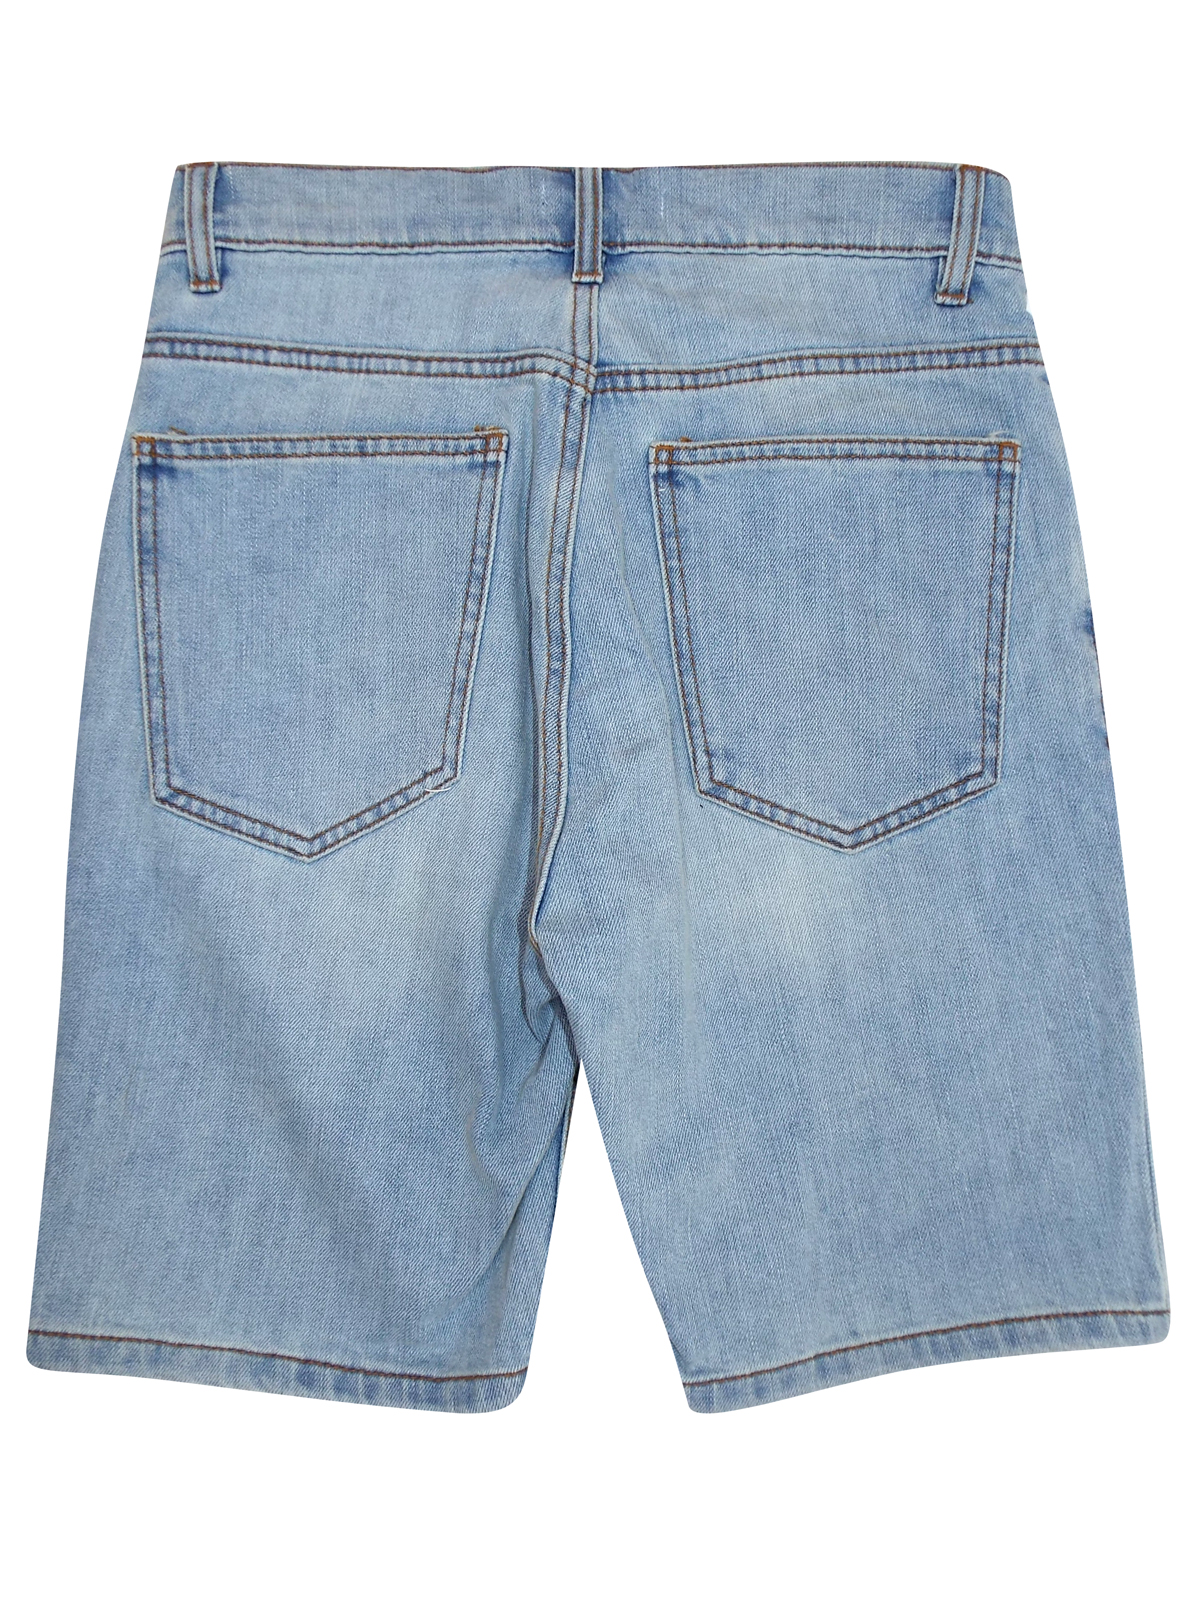 M4ngo LIGHT-DENIM Cotton Rich 5-Pocket Denim Shorts - Waist Size 28 to 36